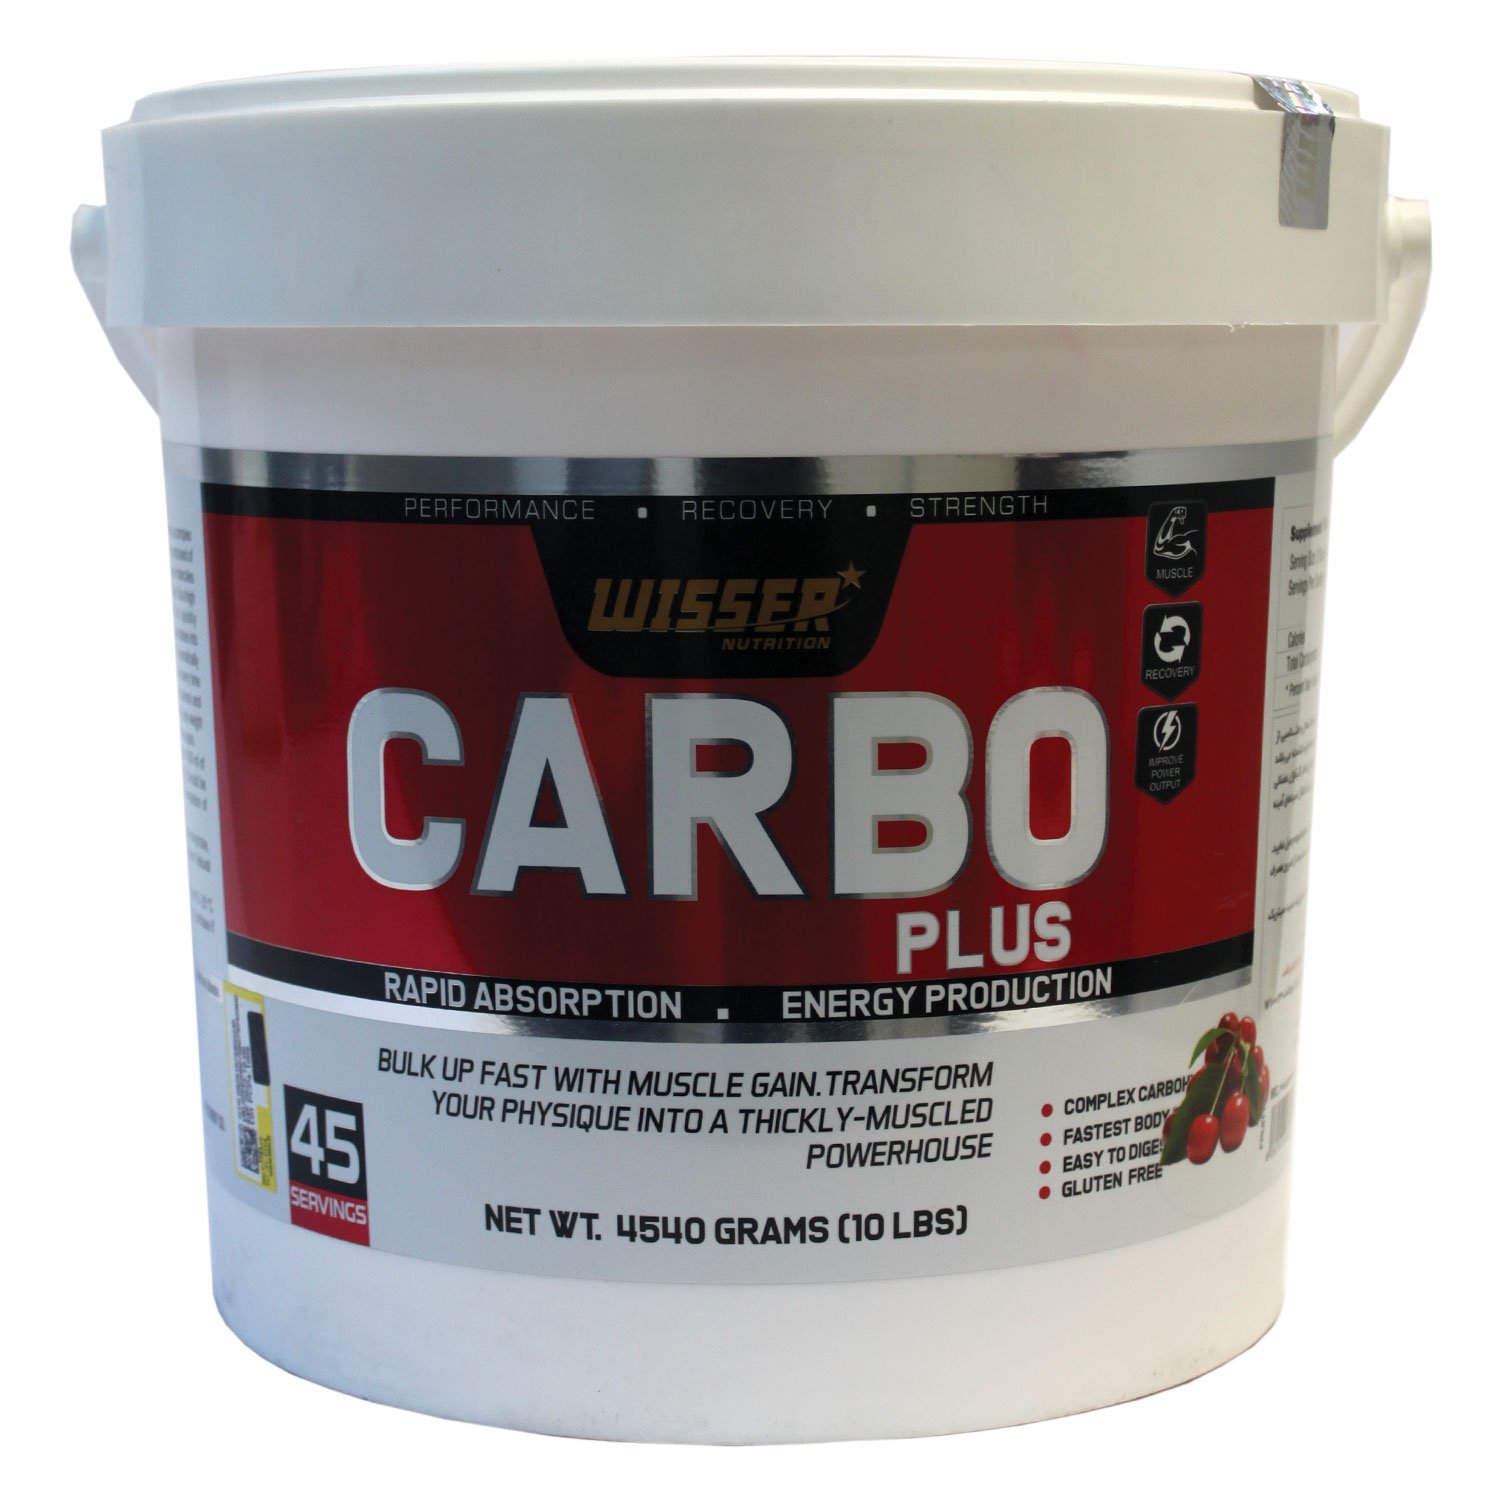 کربو پلاس ویثر 4540 گرمی Wisser Carbo Plus